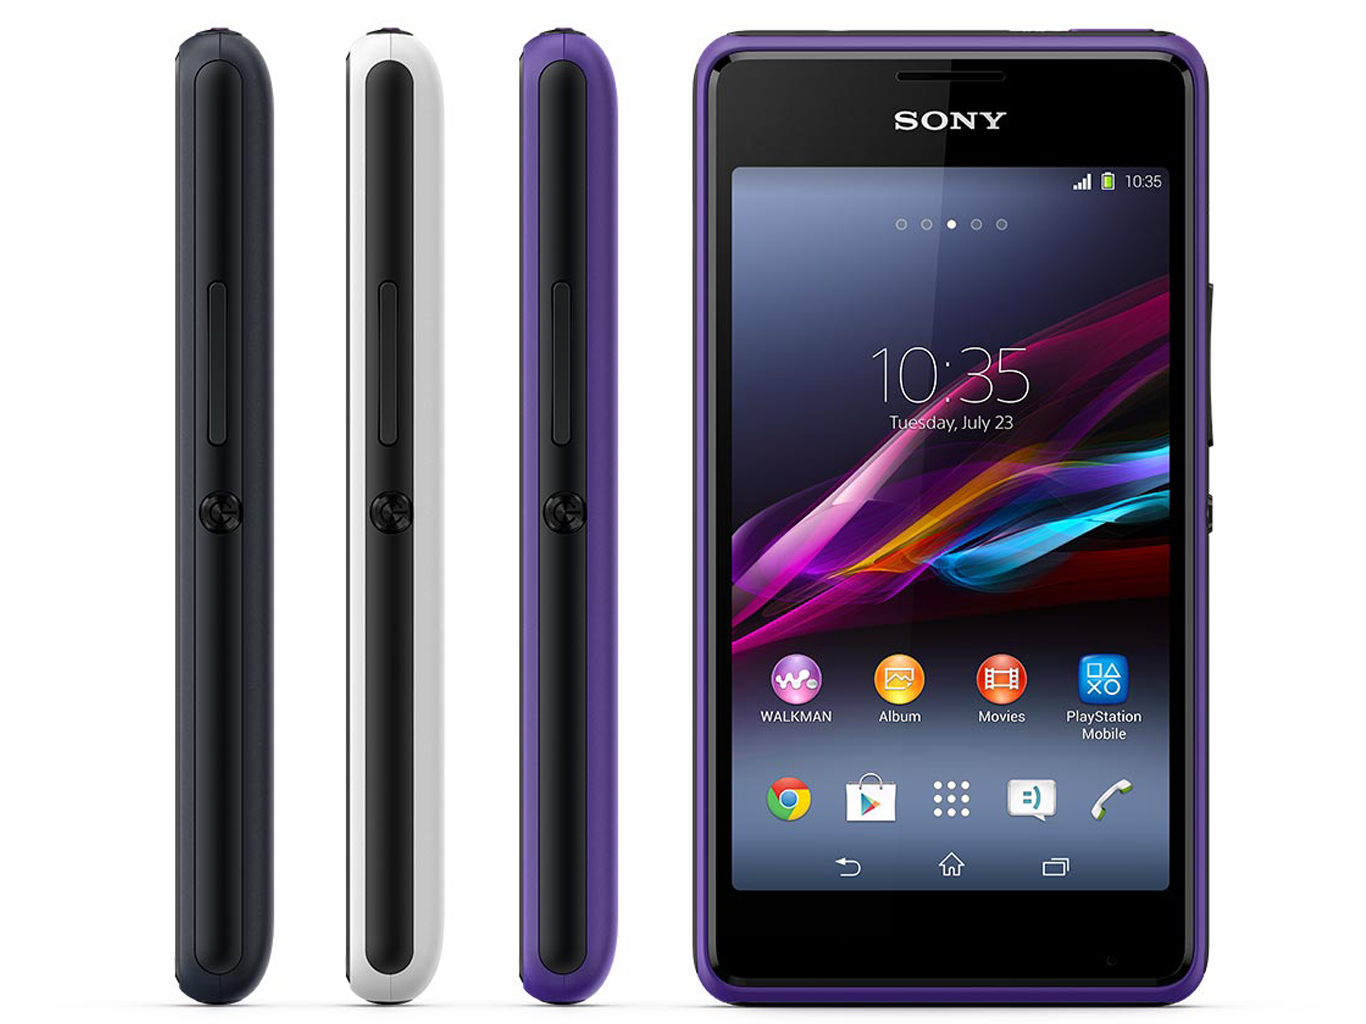 Sony Xperia E1 Smartphone Review - NotebookCheck.net